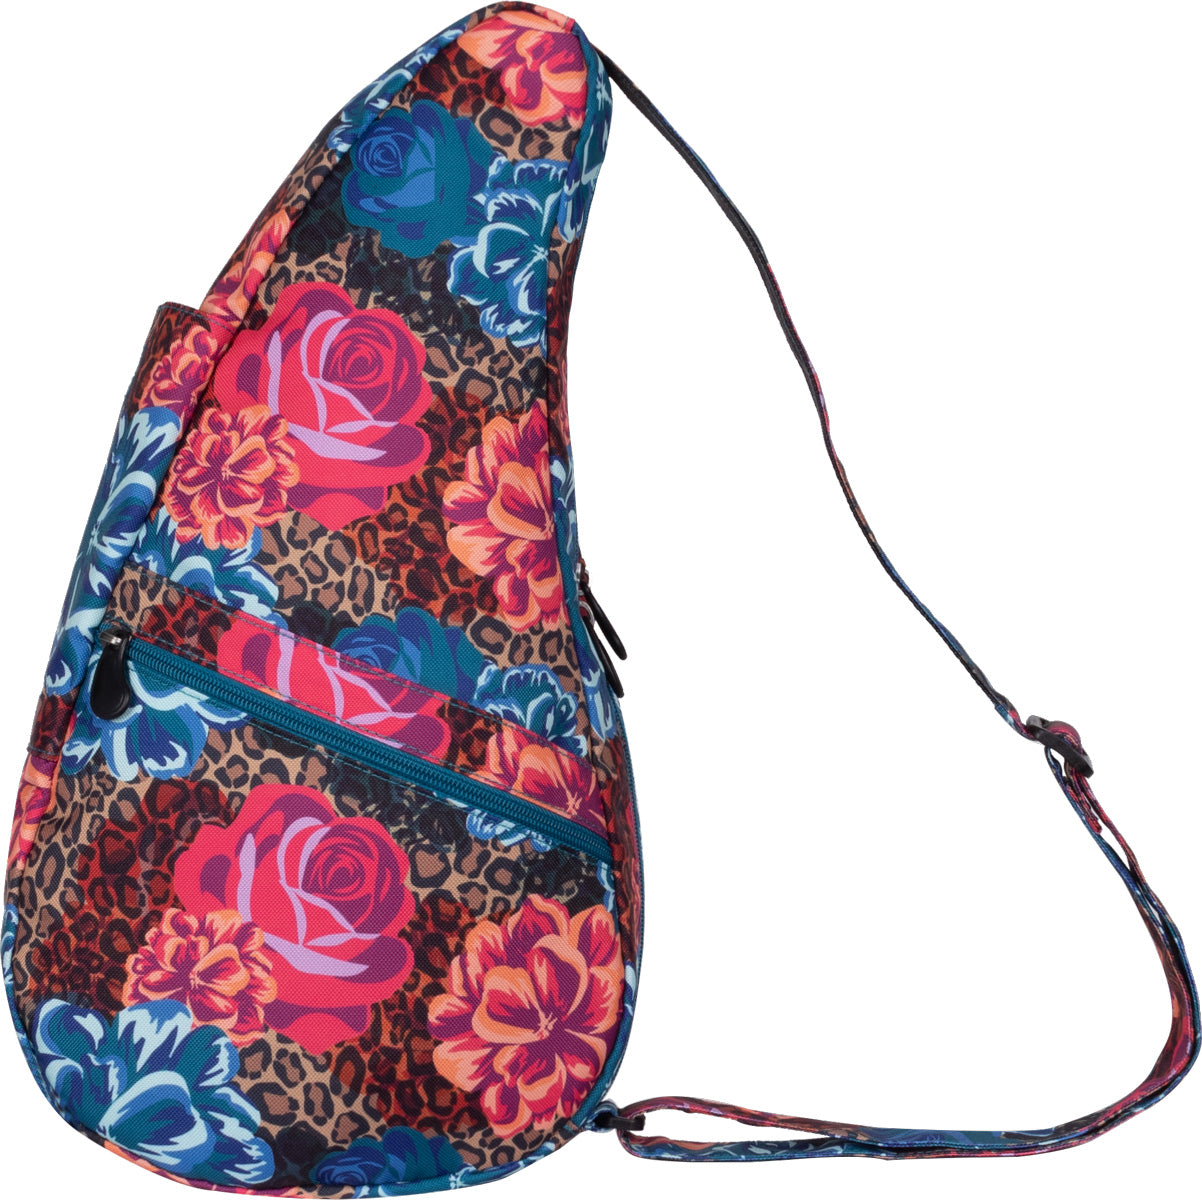 AmeriBag Small Healthy Back Bag Tote Prints and Patterns (Wild Rose)